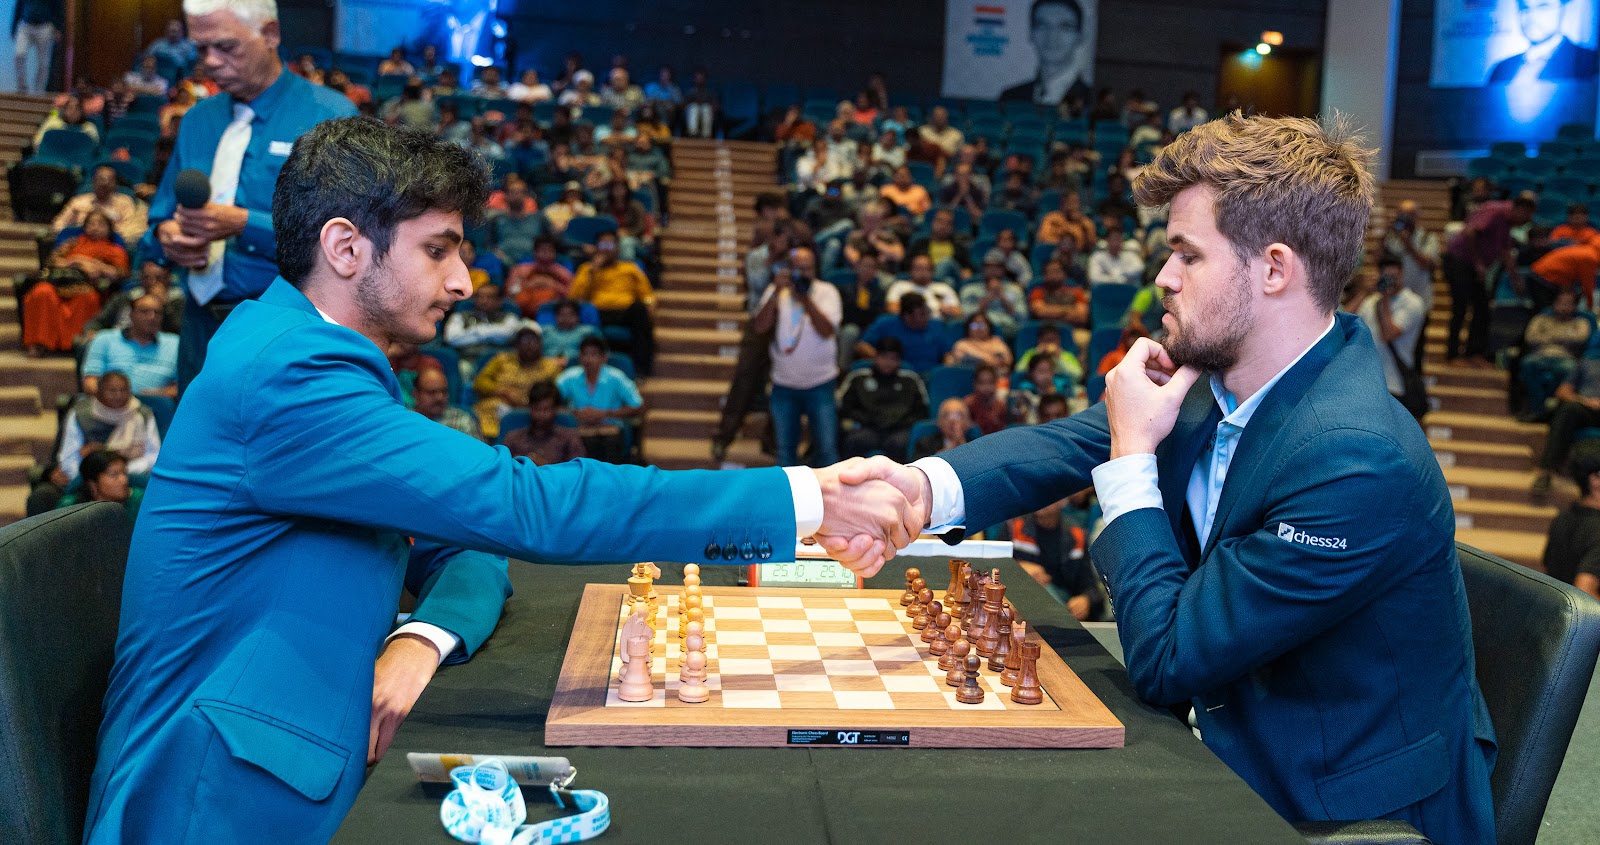 2019 Tata Steel Chess India Rapid & Blitz - Day 5 Recap